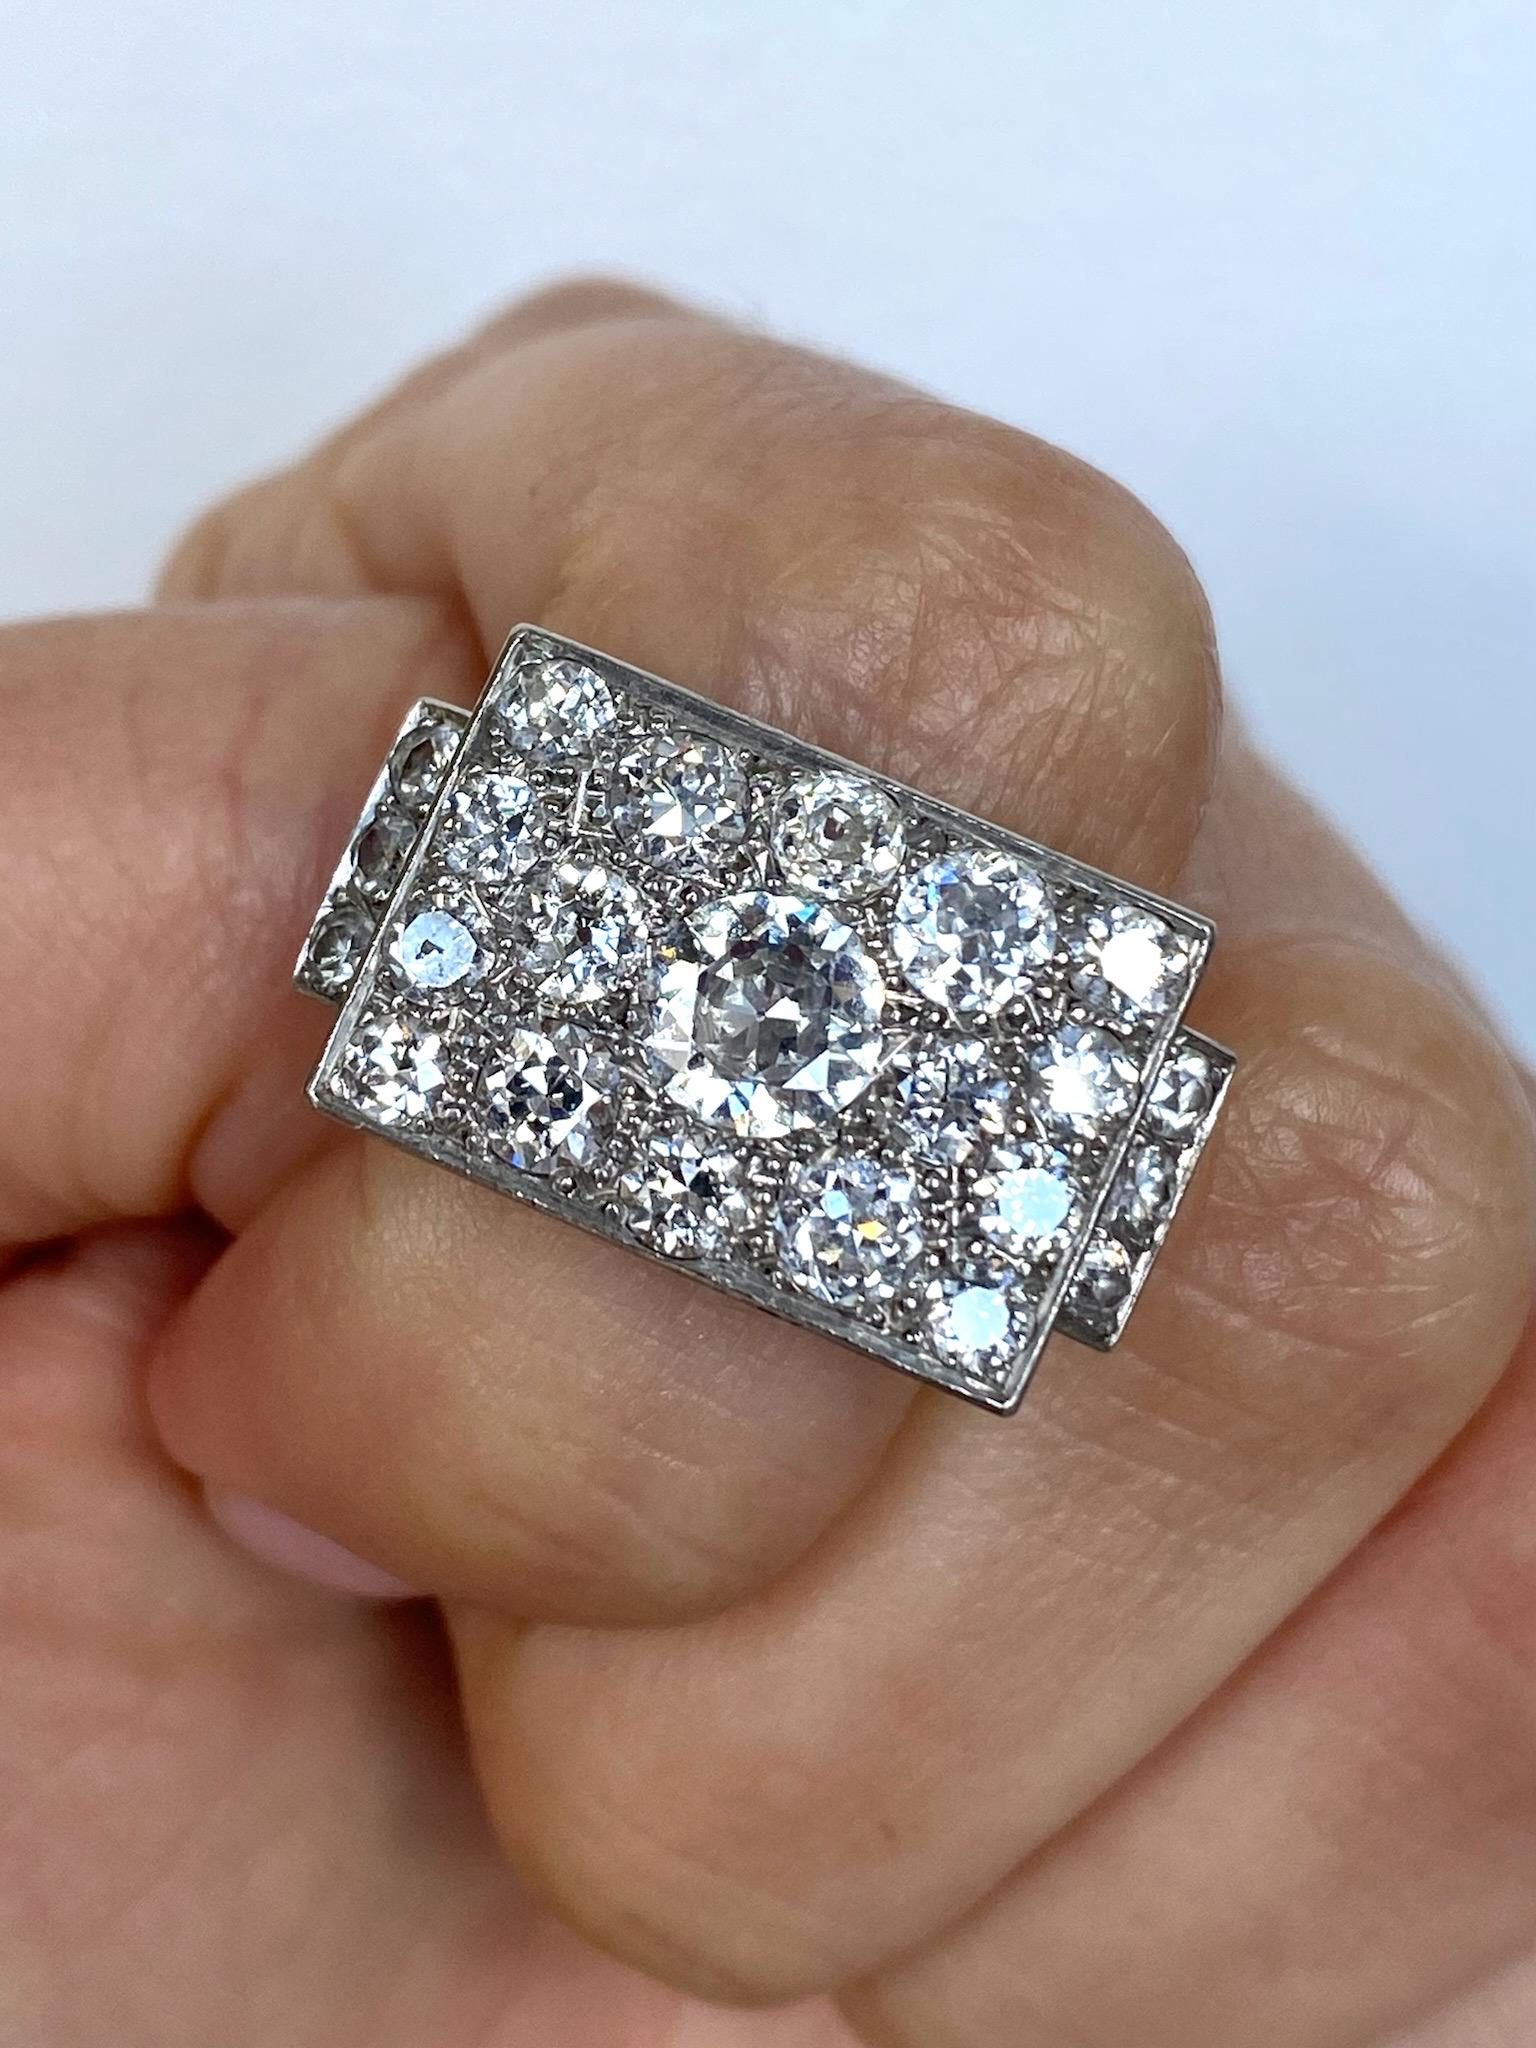 Old European Cut Art Deco Diamond Ring For Sale